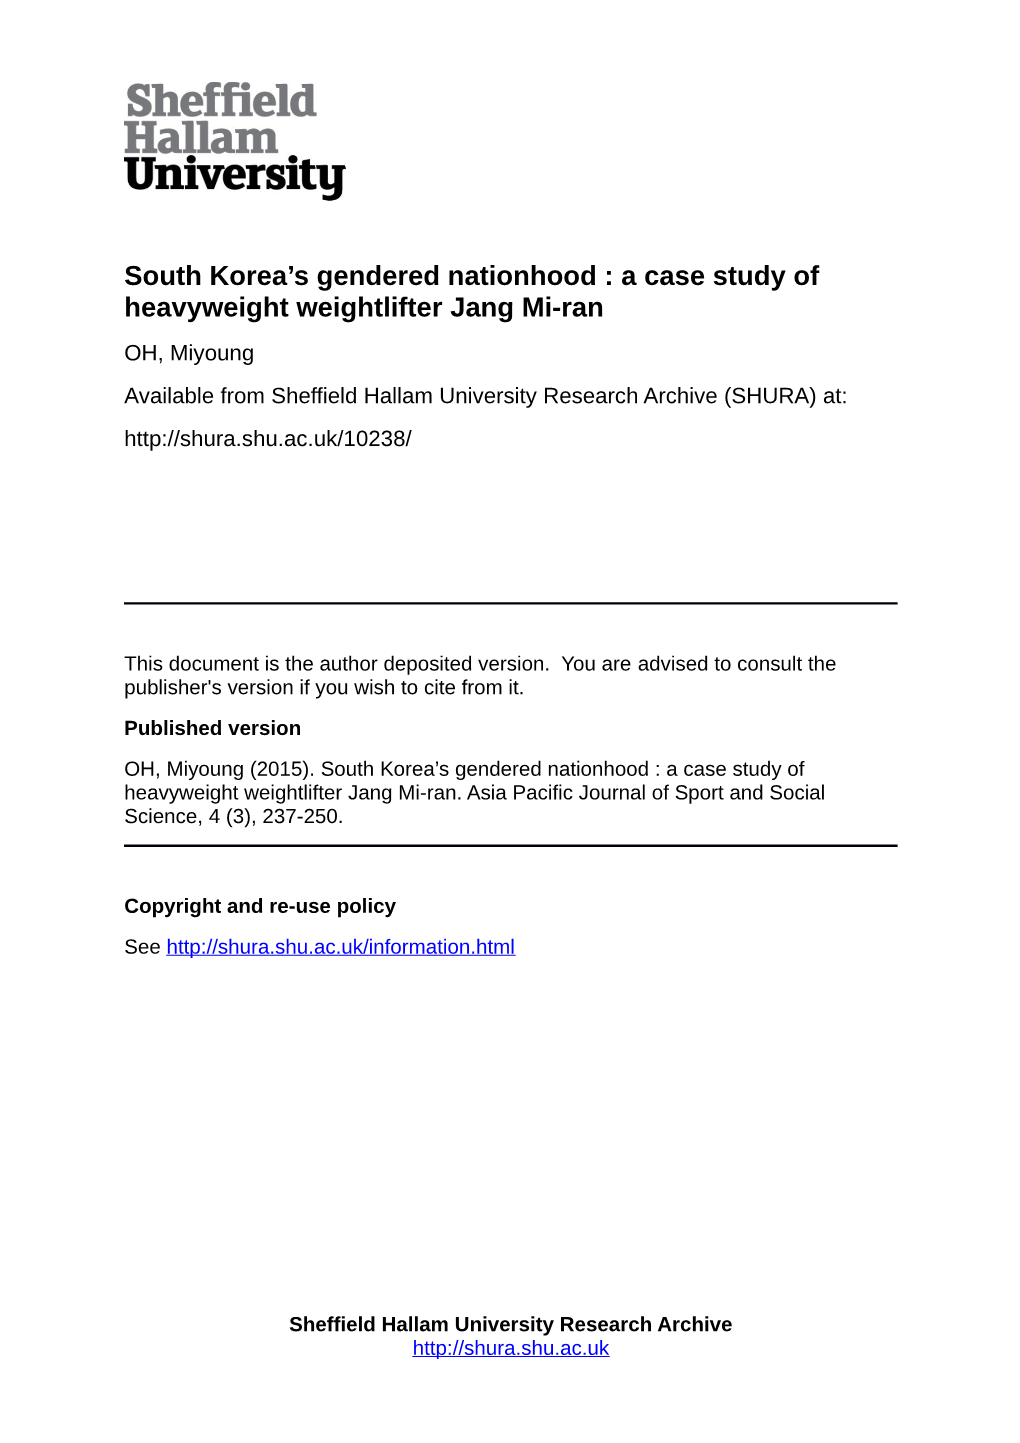 South Korea's Gendered Nationhood : a Case Study of Heavyweight Weightlifter Jang Mi-Ran